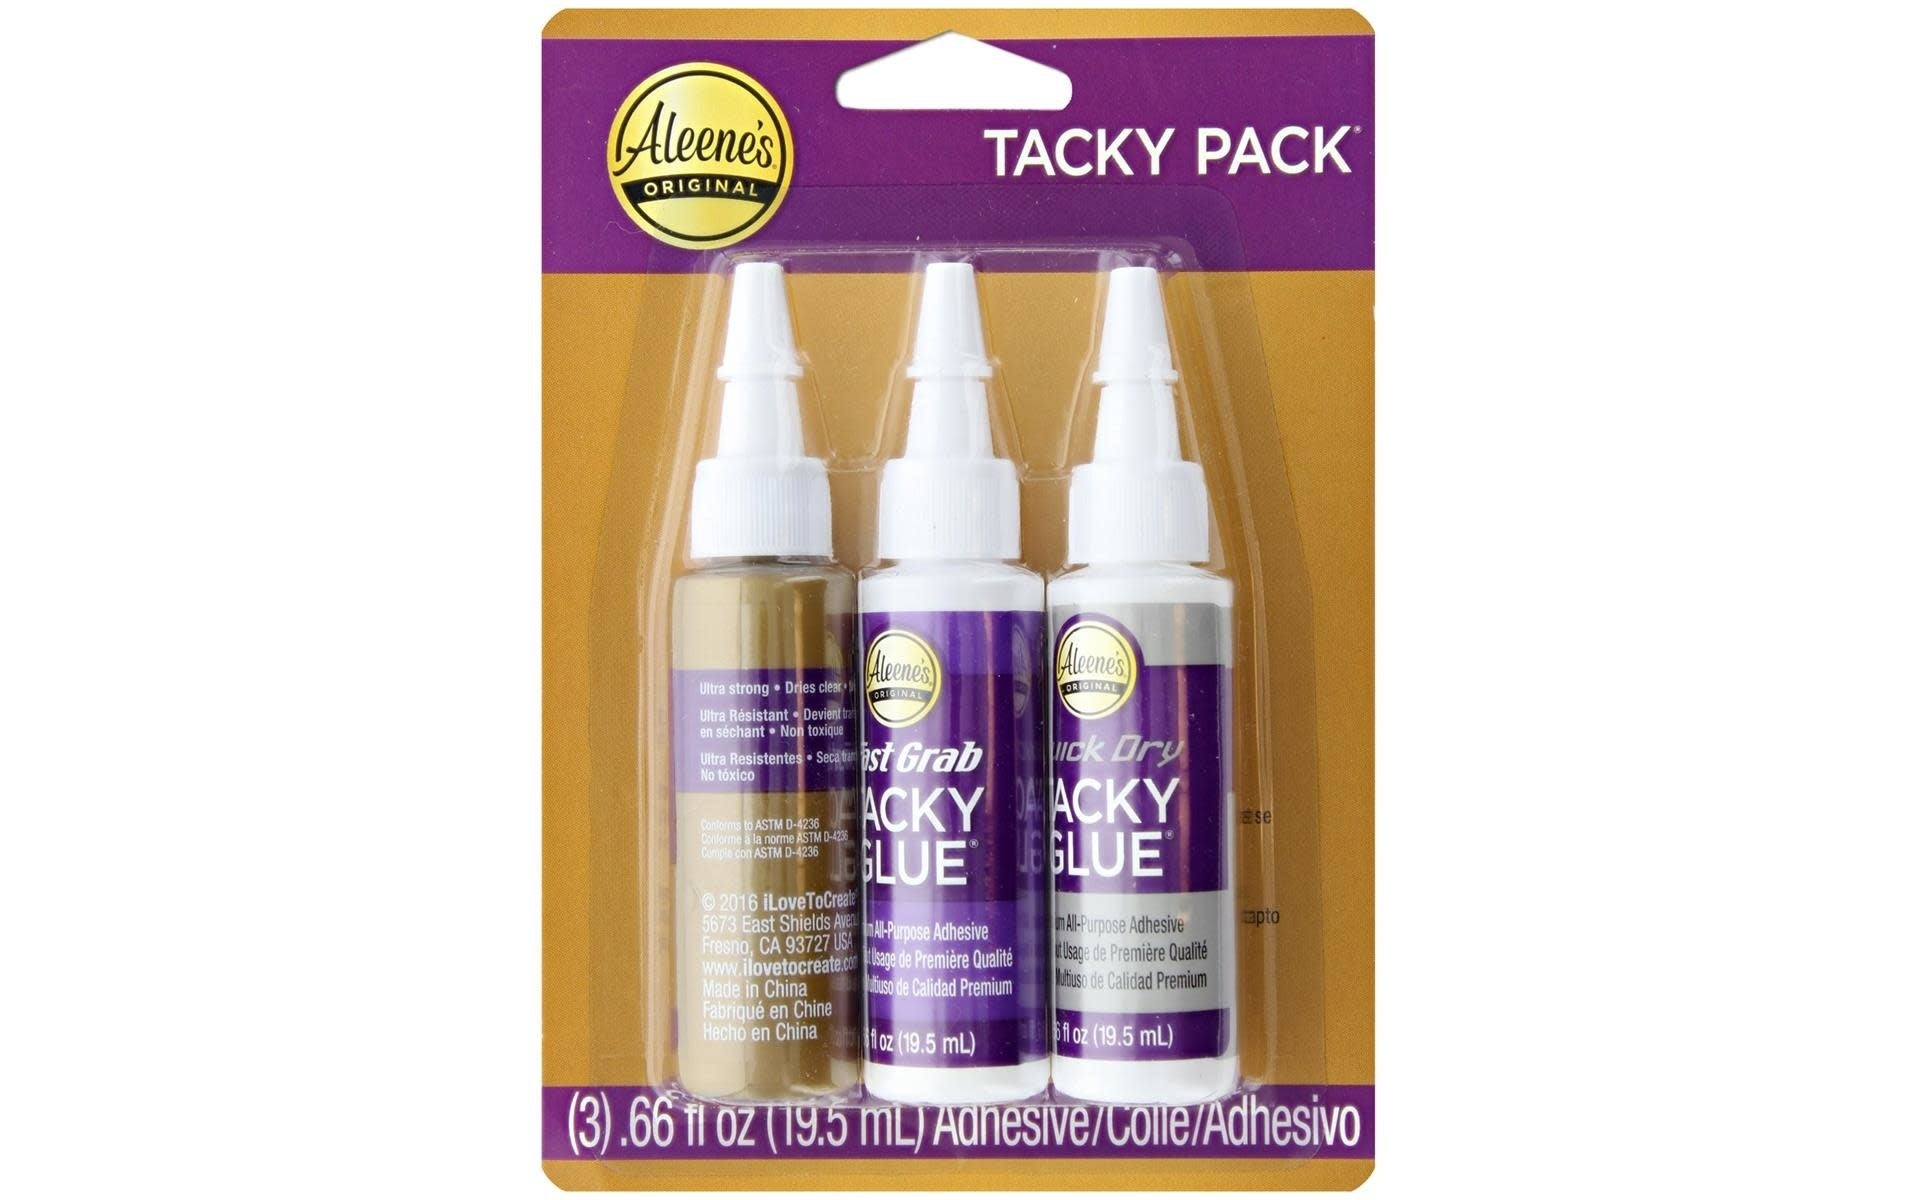 Aleene'S Original Premium All Purpose Tacky Glue 3 Pack 4 Oz NEW